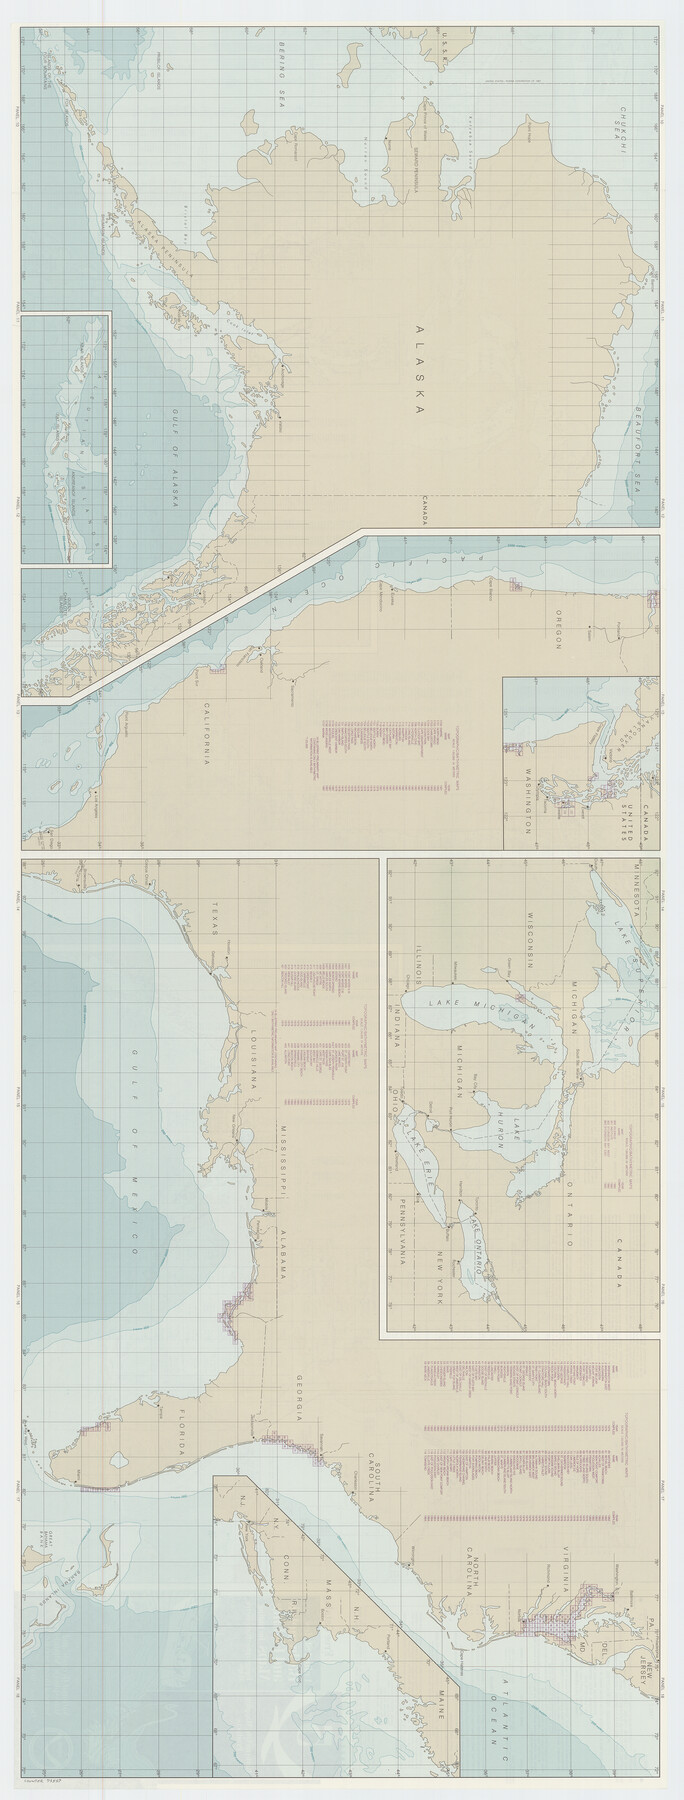 https://historictexasmaps.com/wmedia_w1800h1800/maps/73557.tif.jpg